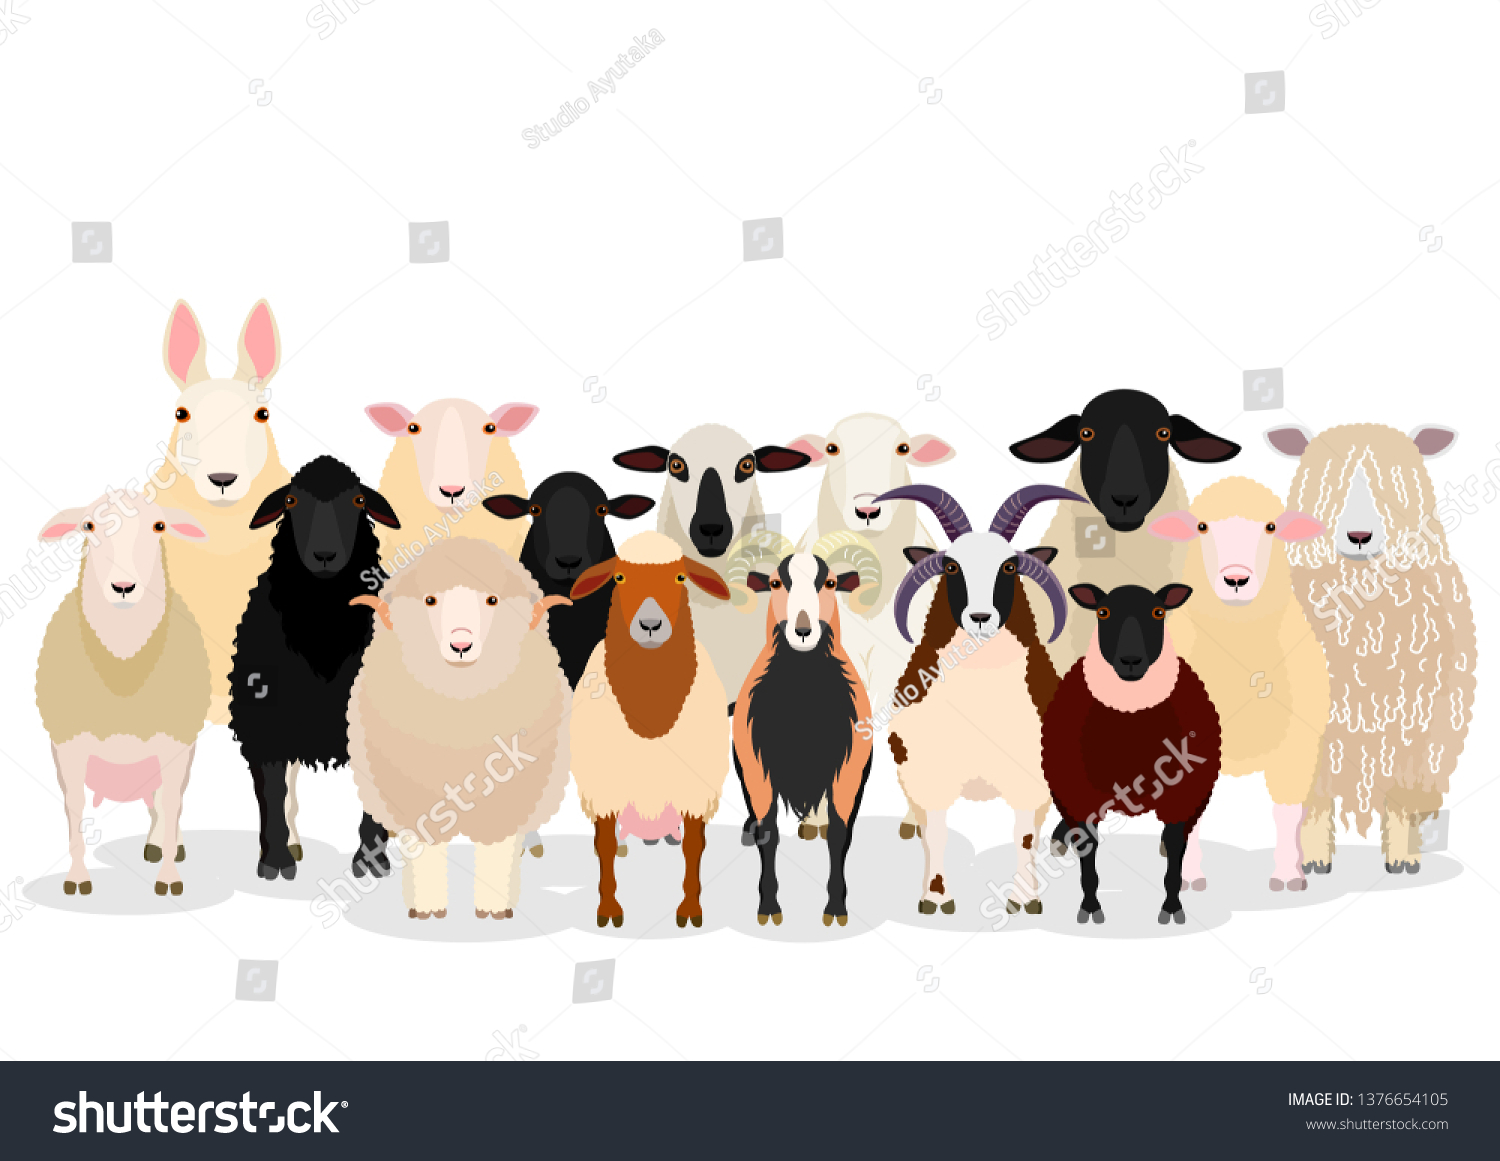 SVG of various sheep group svg